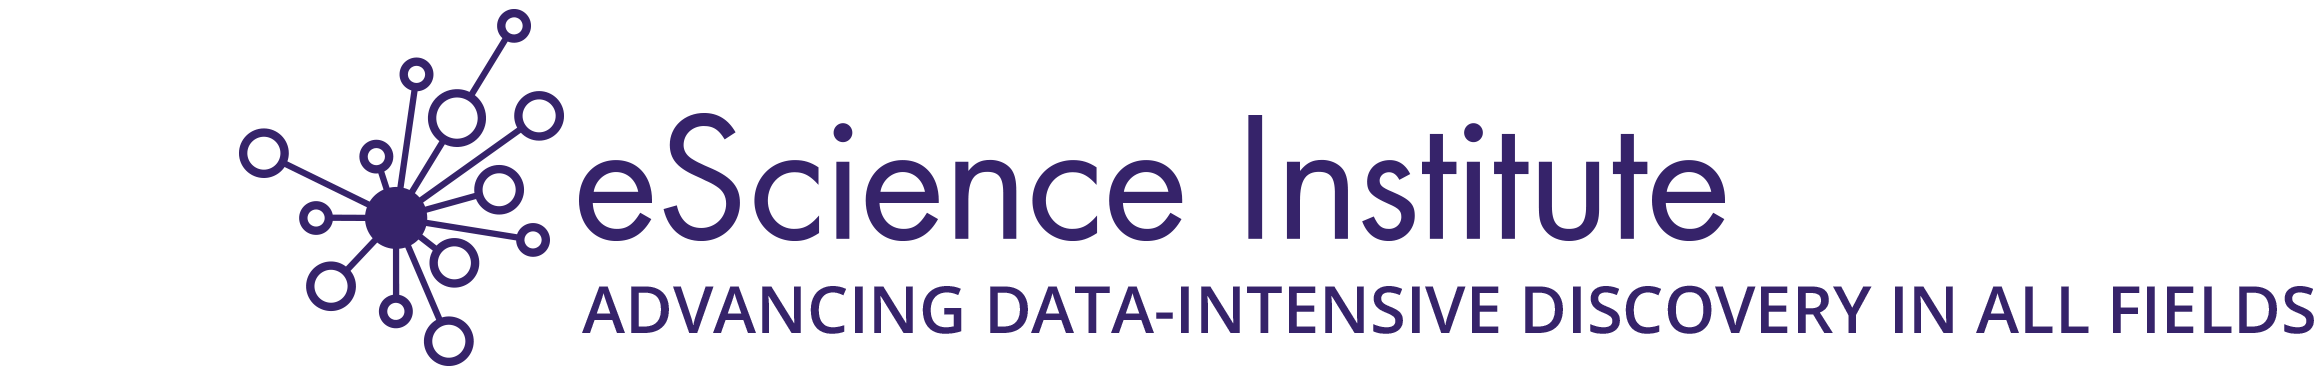 _images/eScience_Logo_HR.png